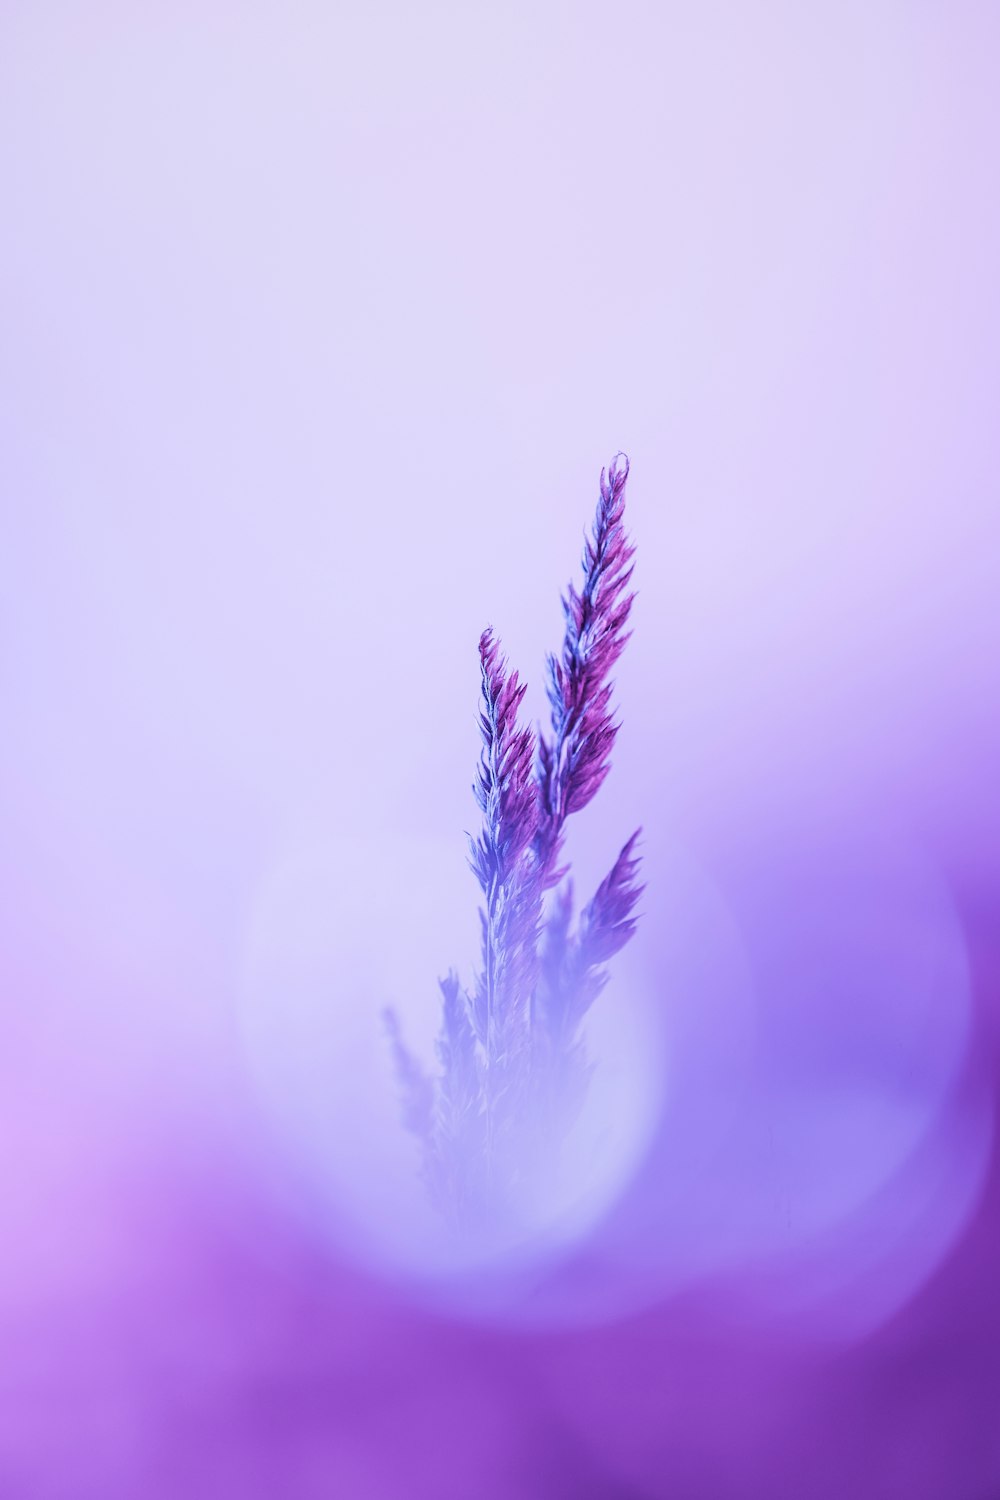 a blurry photo of a purple plant